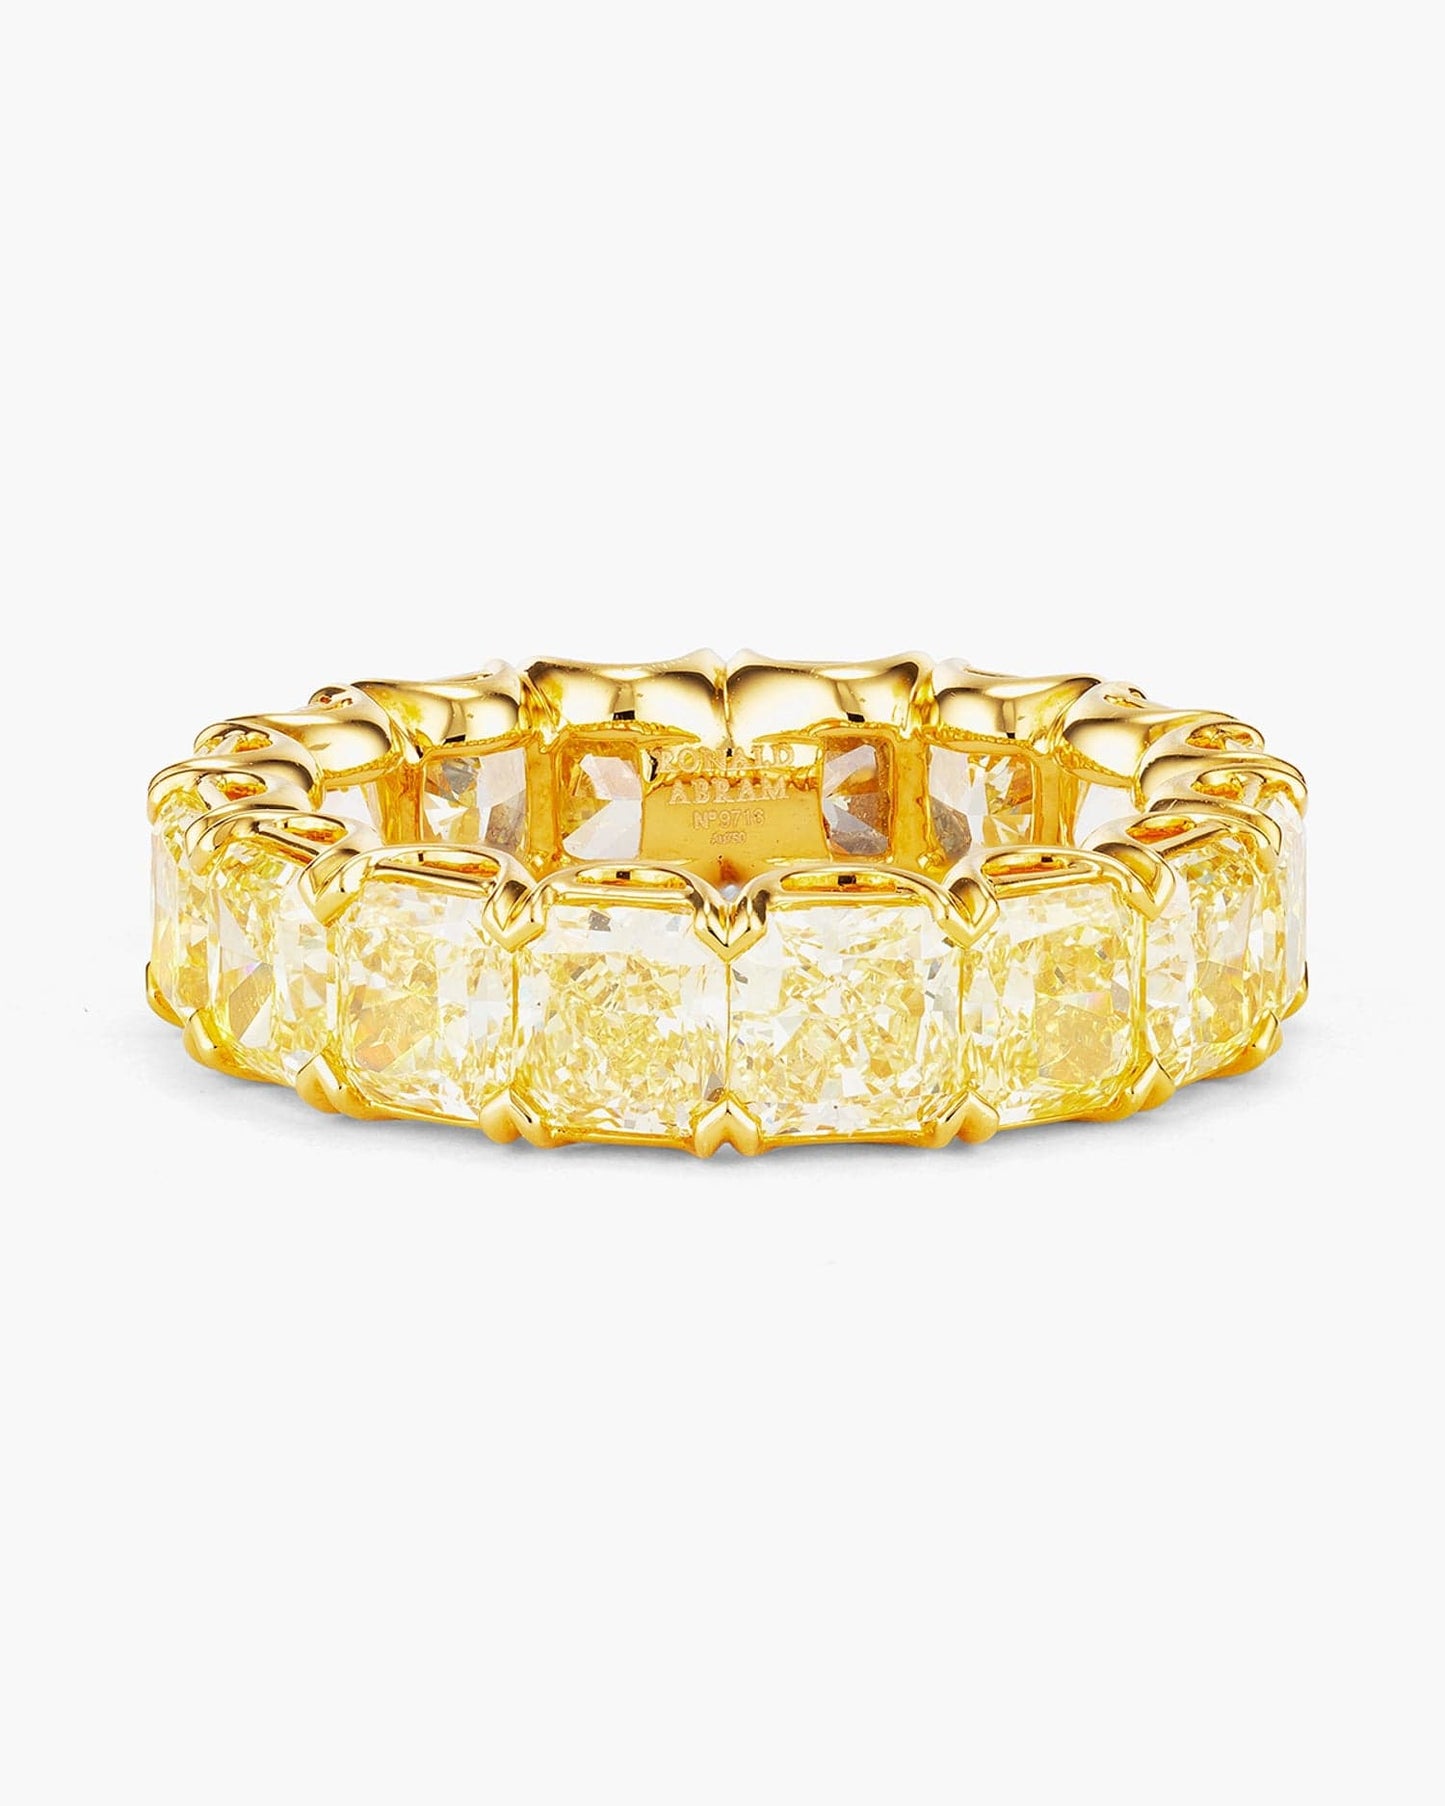 Radiant Cut Fancy Intense Yellow Diamond Eternity Ring (0.50 carat)